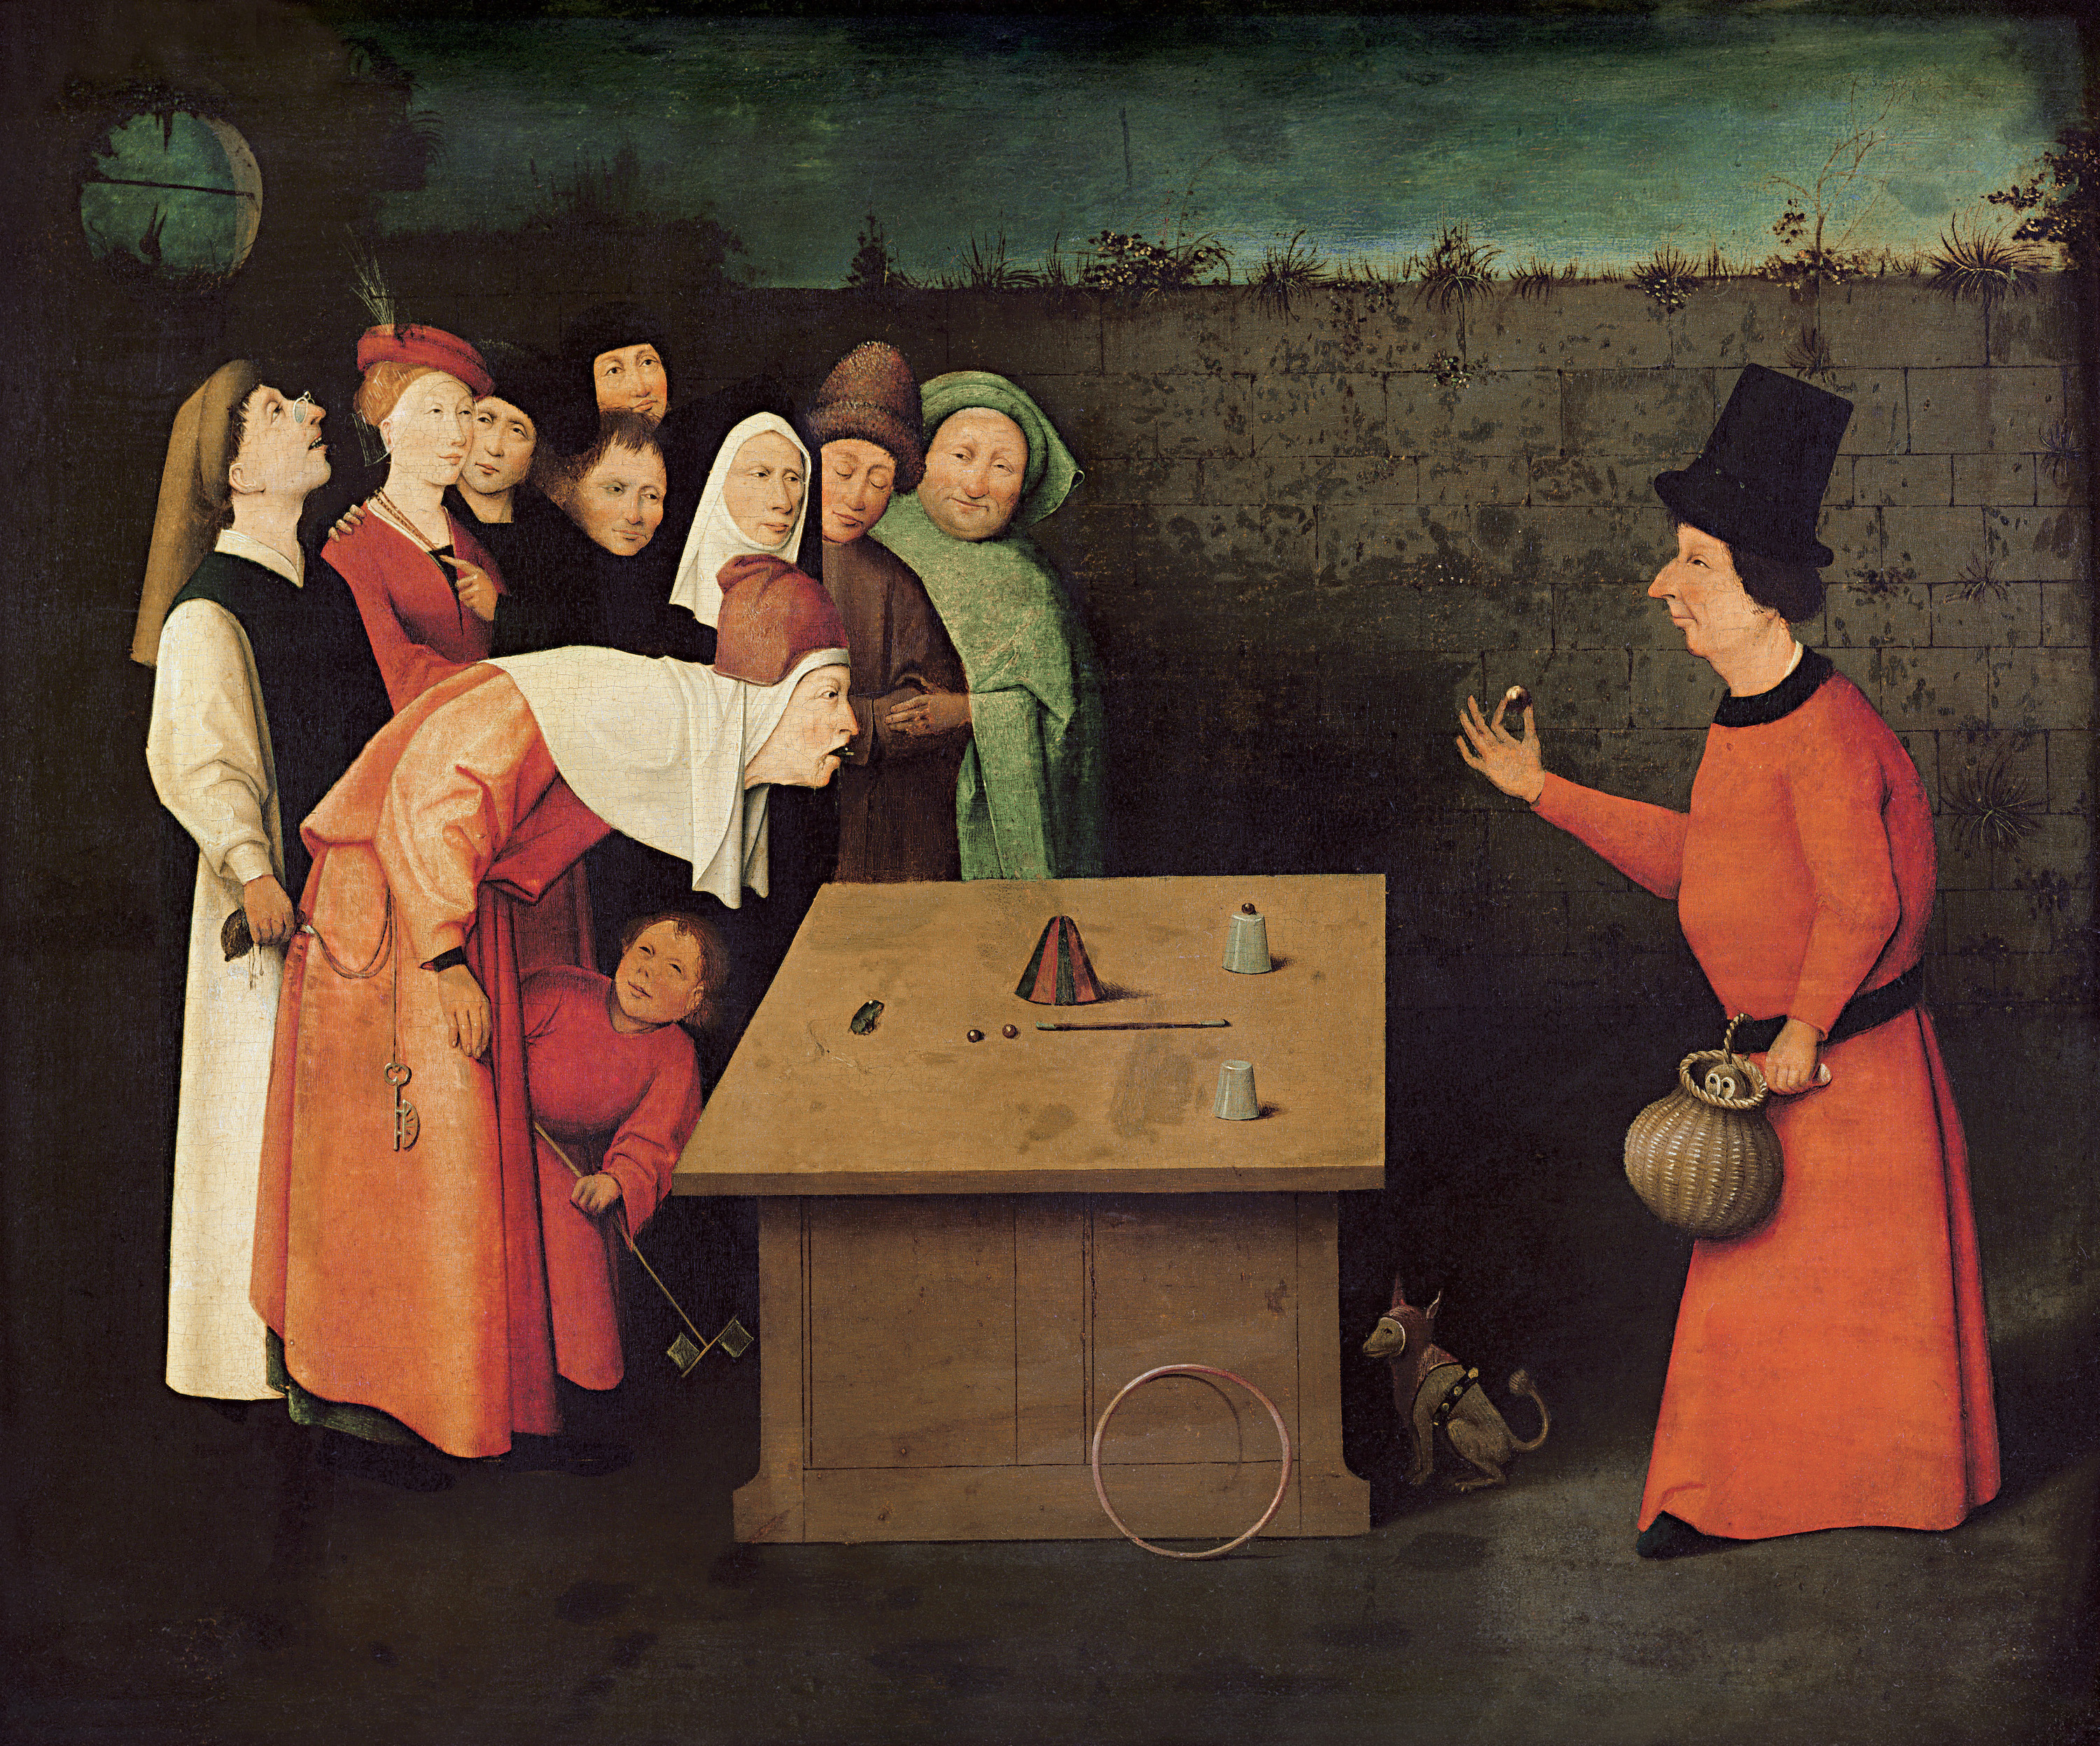 The Conjurer by Hieronymus Bosch - between 1496 and 1516 - 53 x 65 cm Musée municipal de Saint-Germain-en-Laye